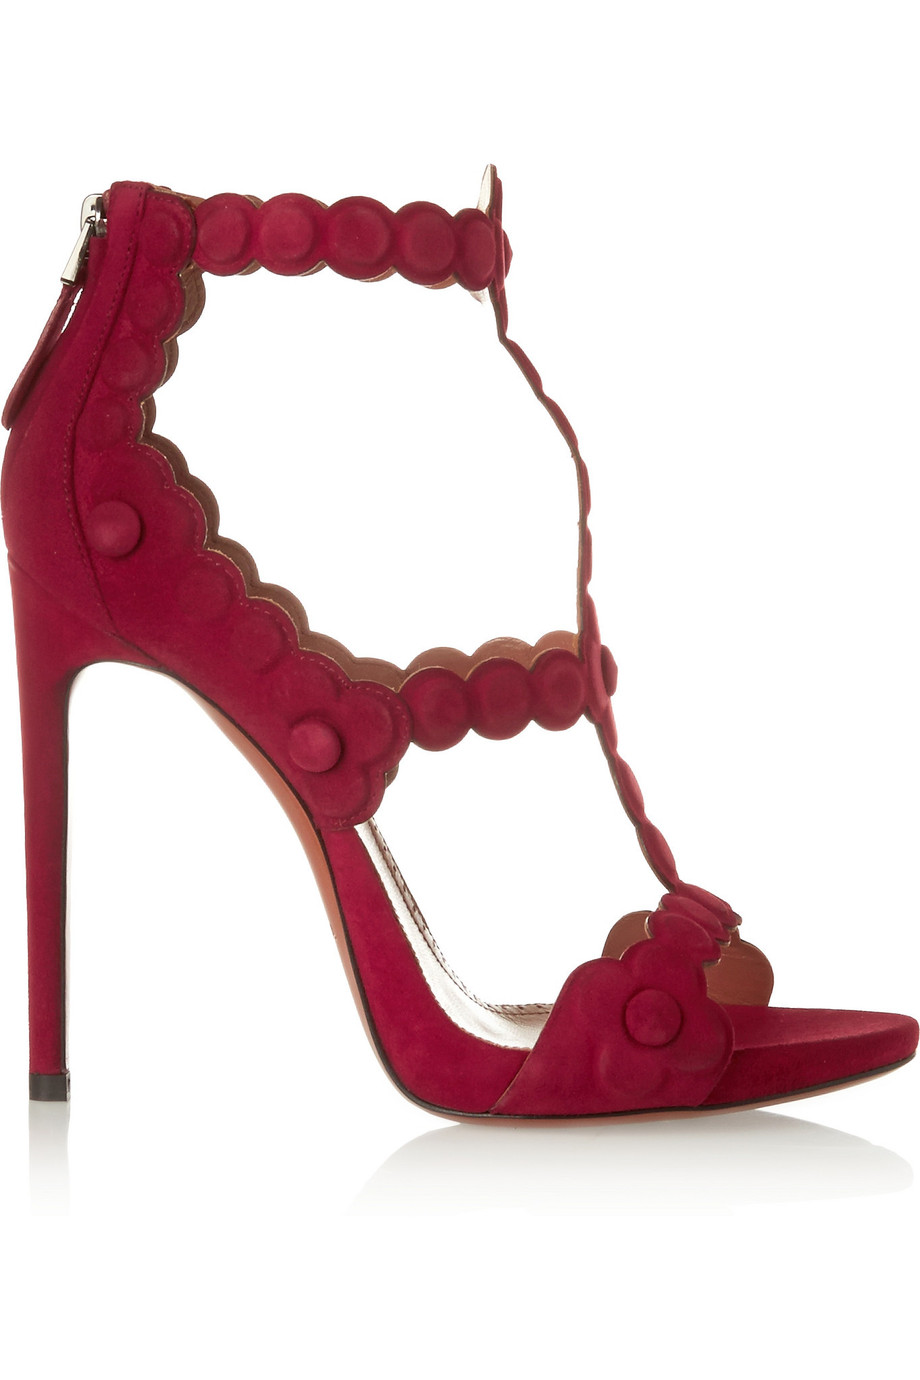 alaia-laser-cut-red-sandals